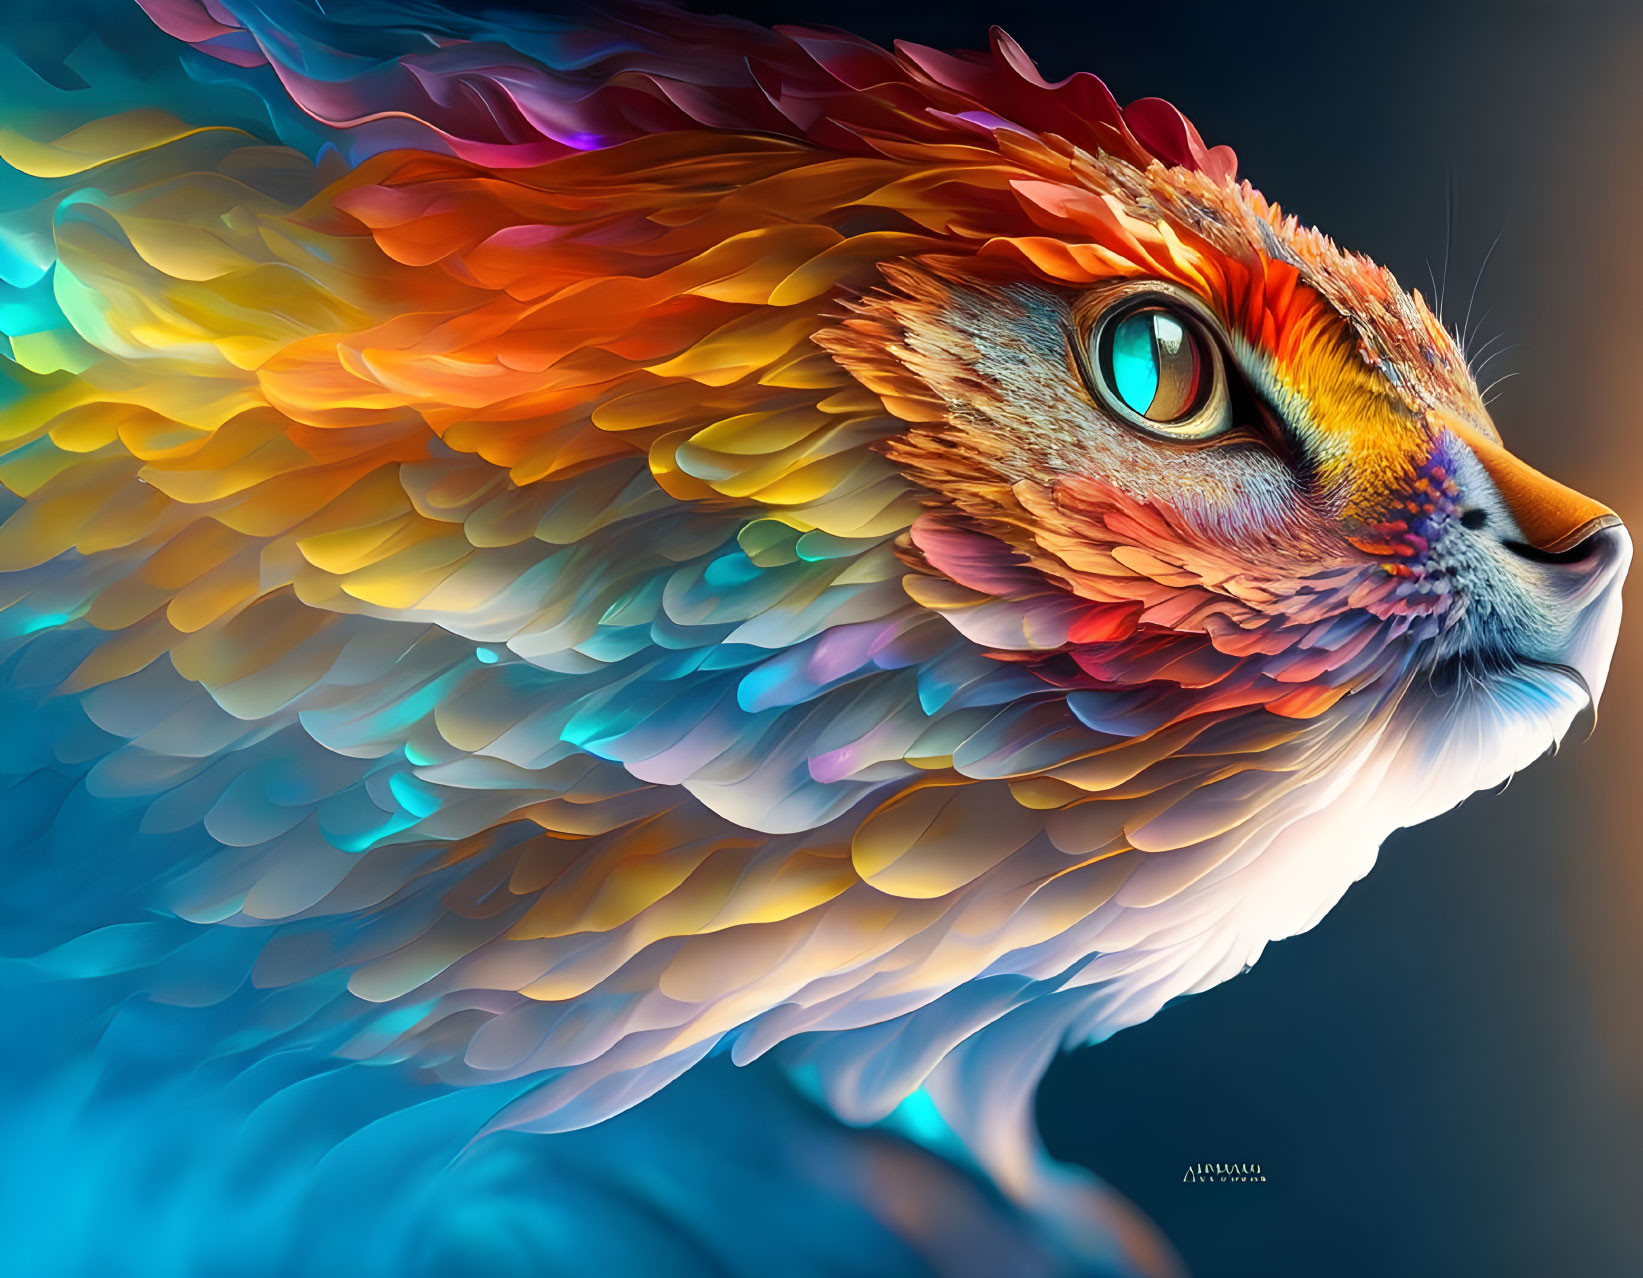 Colorful digital artwork: Cat with vibrant, multicolored fur